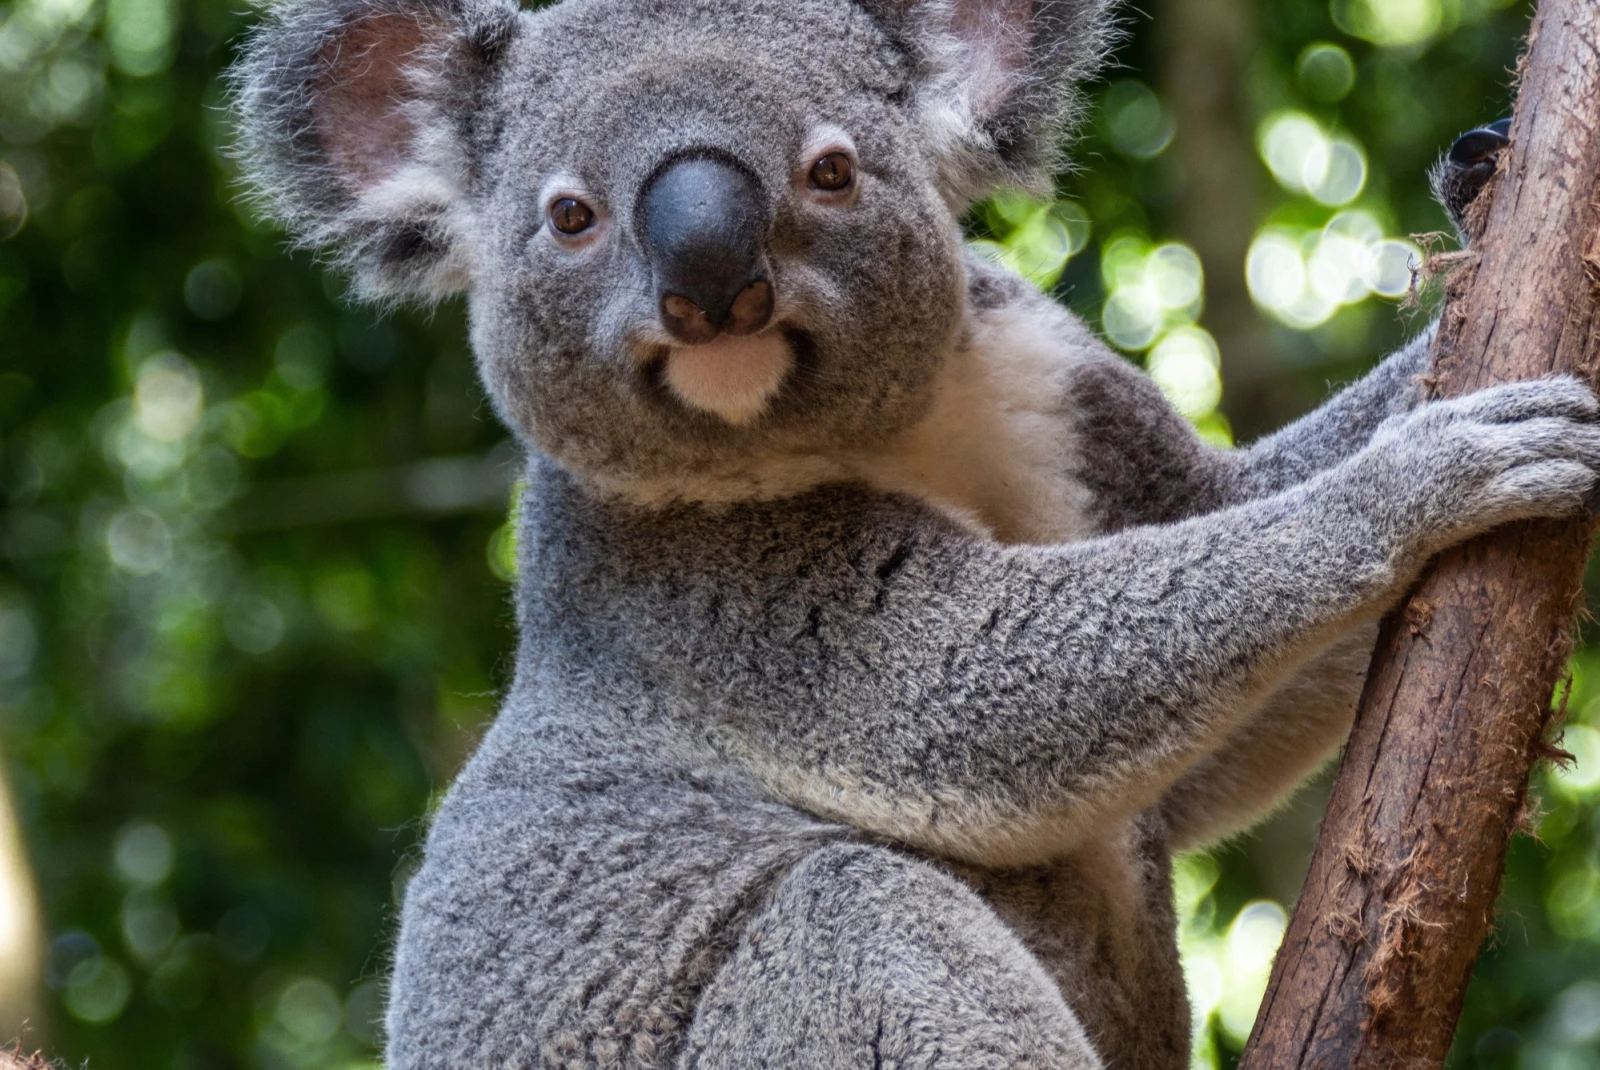 A koala sitting on tree.